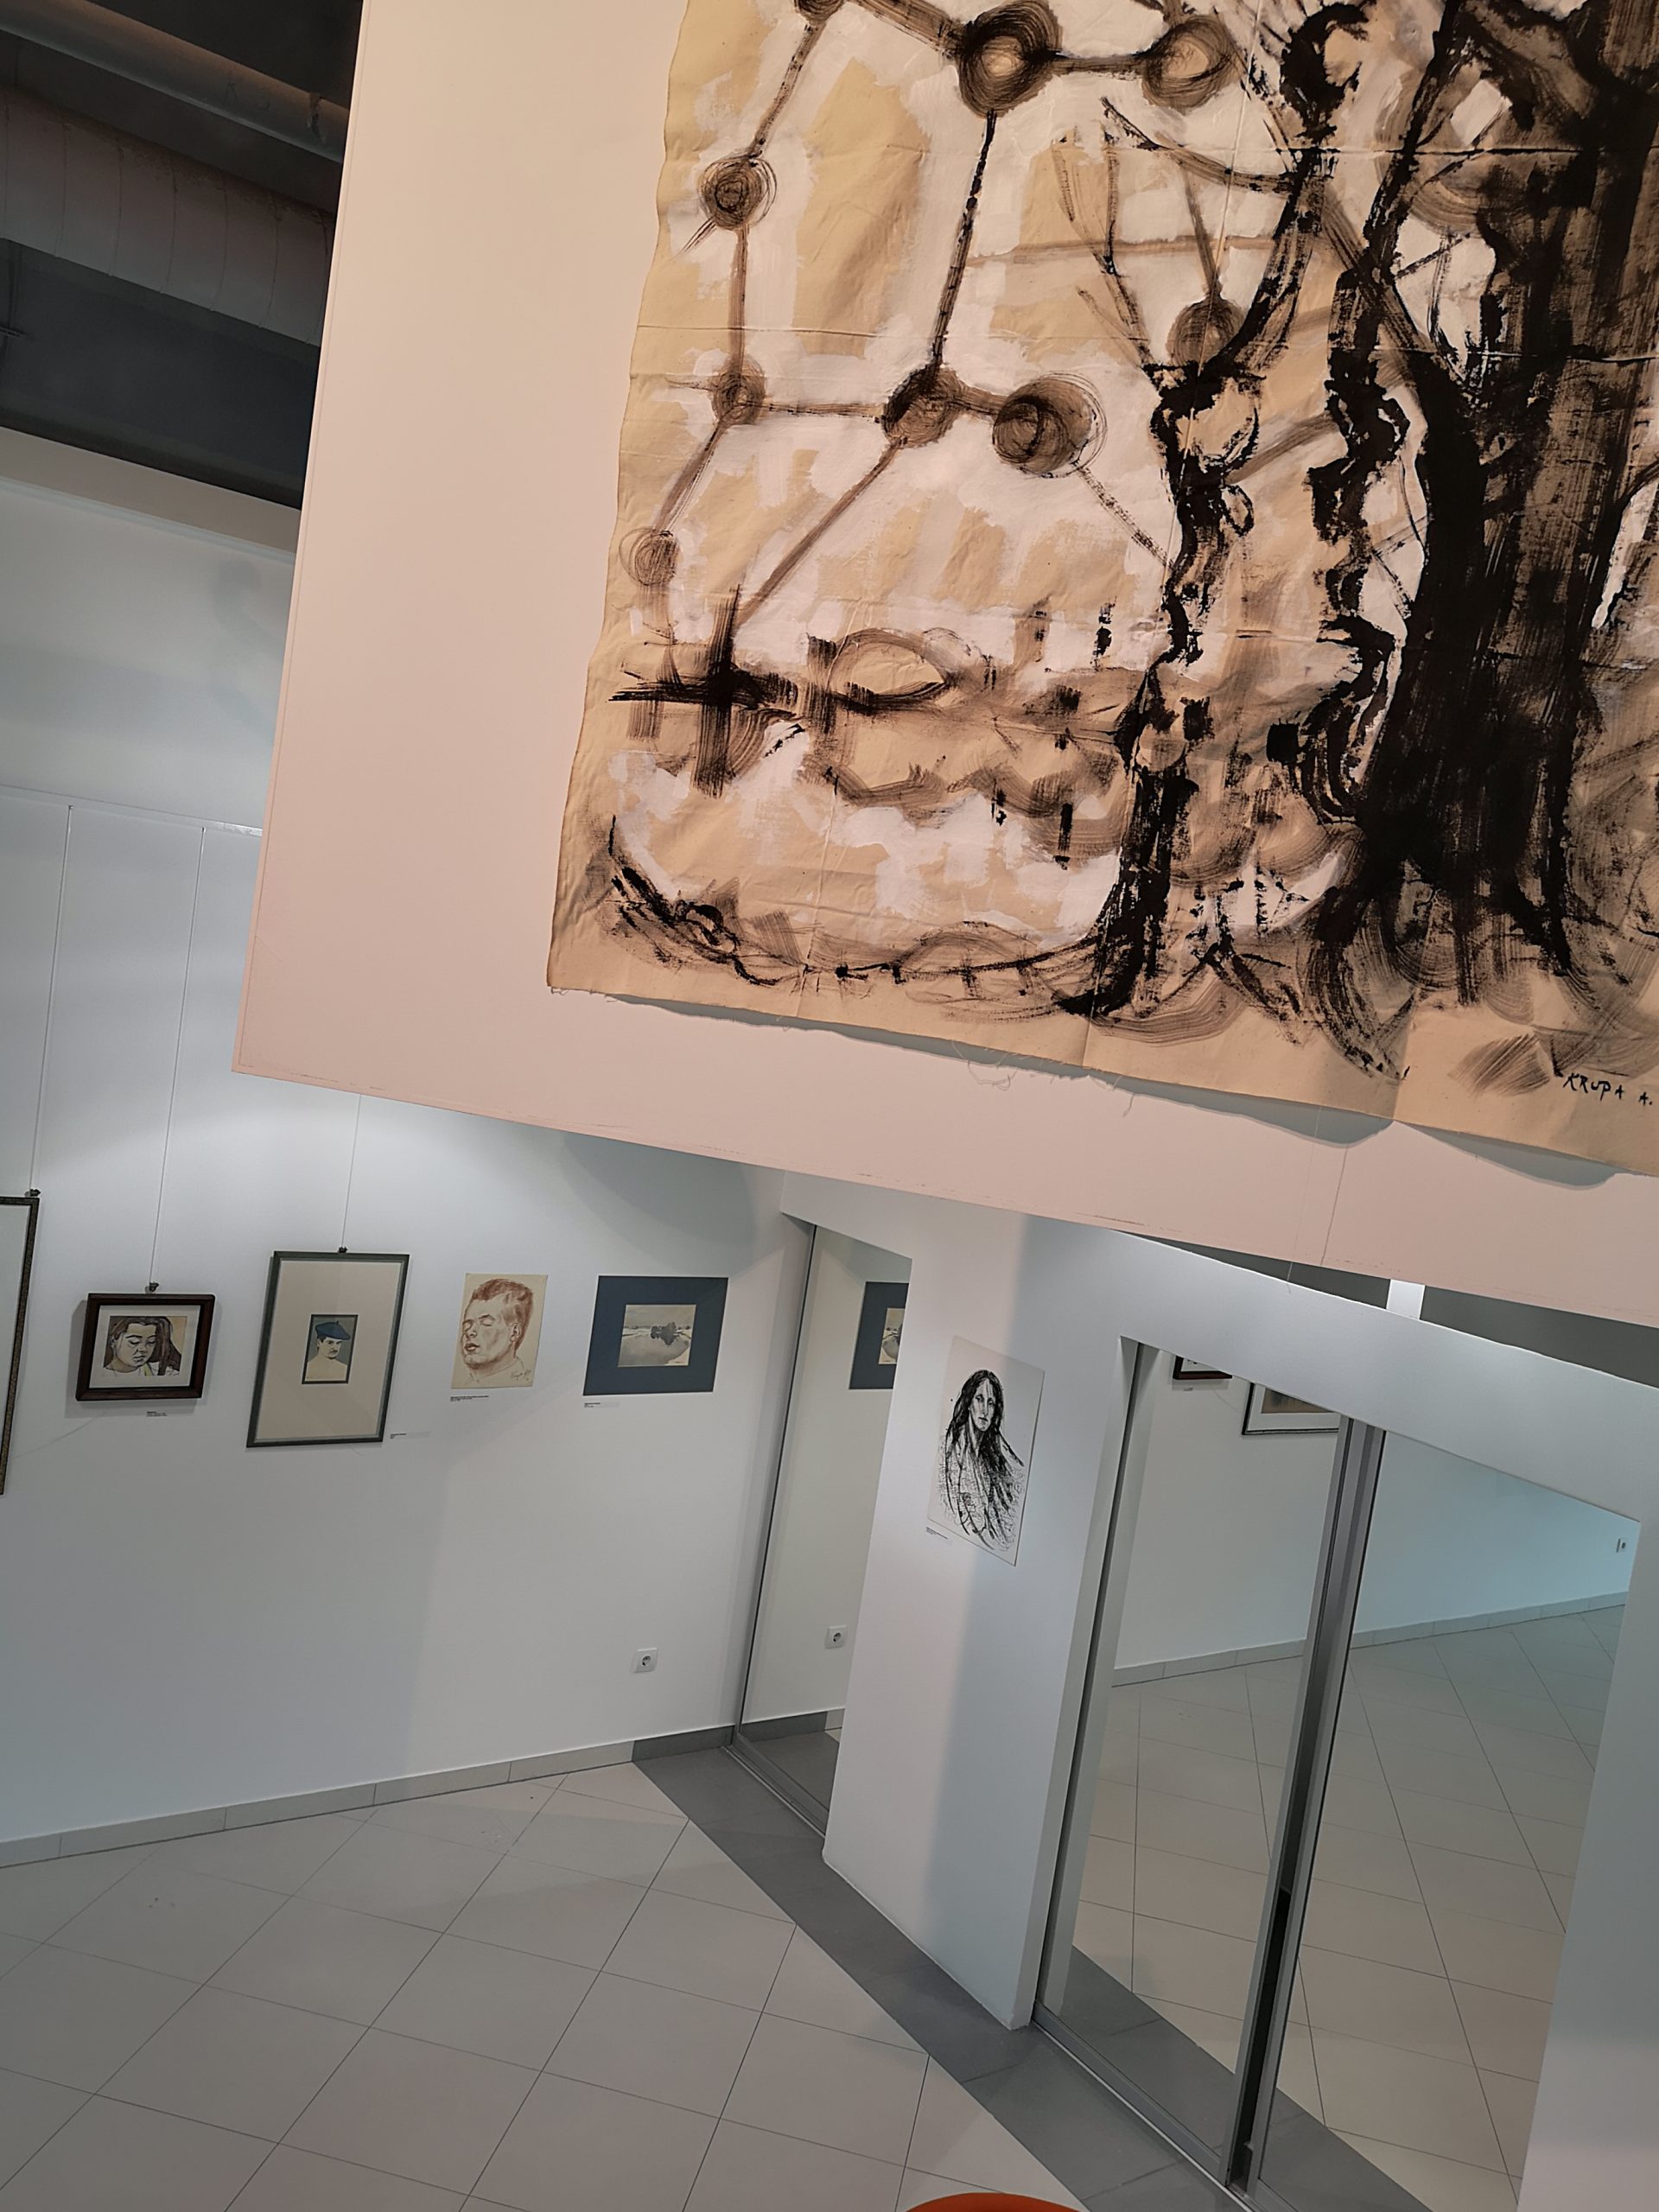  Retrospective 1991-2021 exhibition by renowned Croatian artist Alfred Krupa